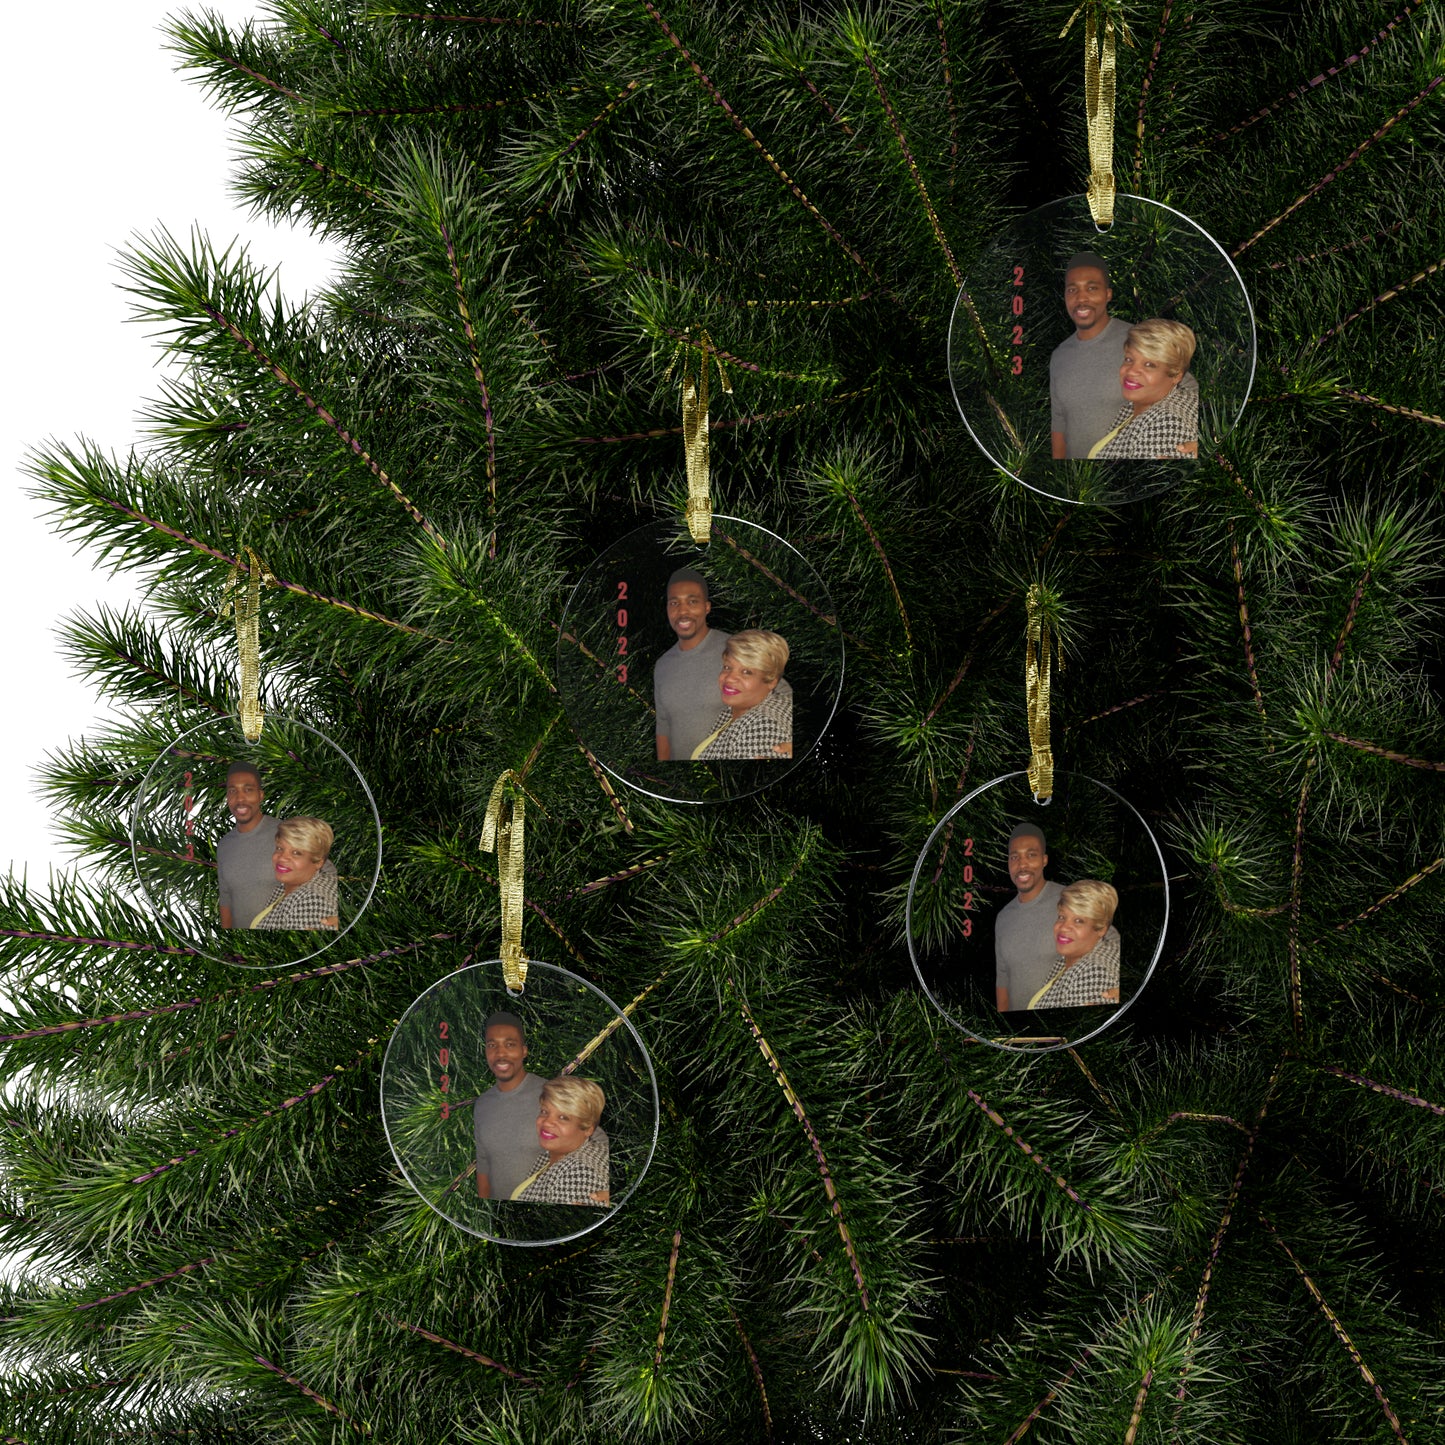 Joann Personalized - 3 | Acrylic Ornaments